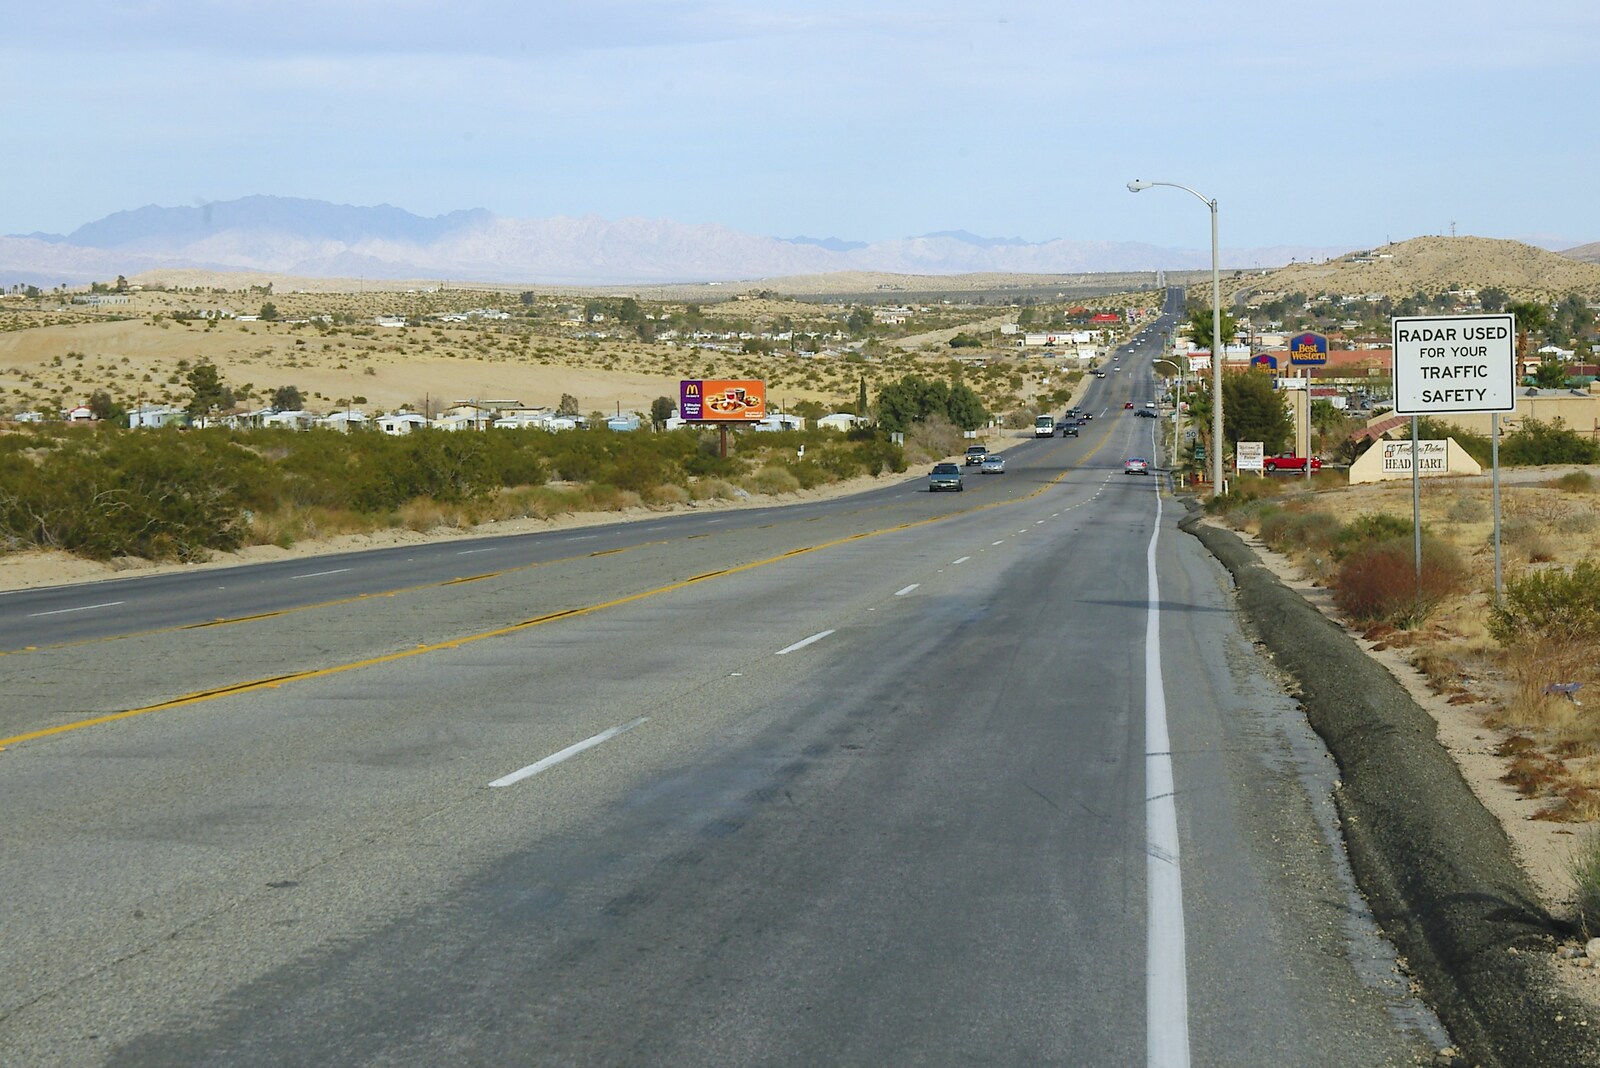 The road to Twentynine Palms from Mojave Desert: San Diego to Joshua Tree and Twentynine Palms, California, US - 5th March 2006